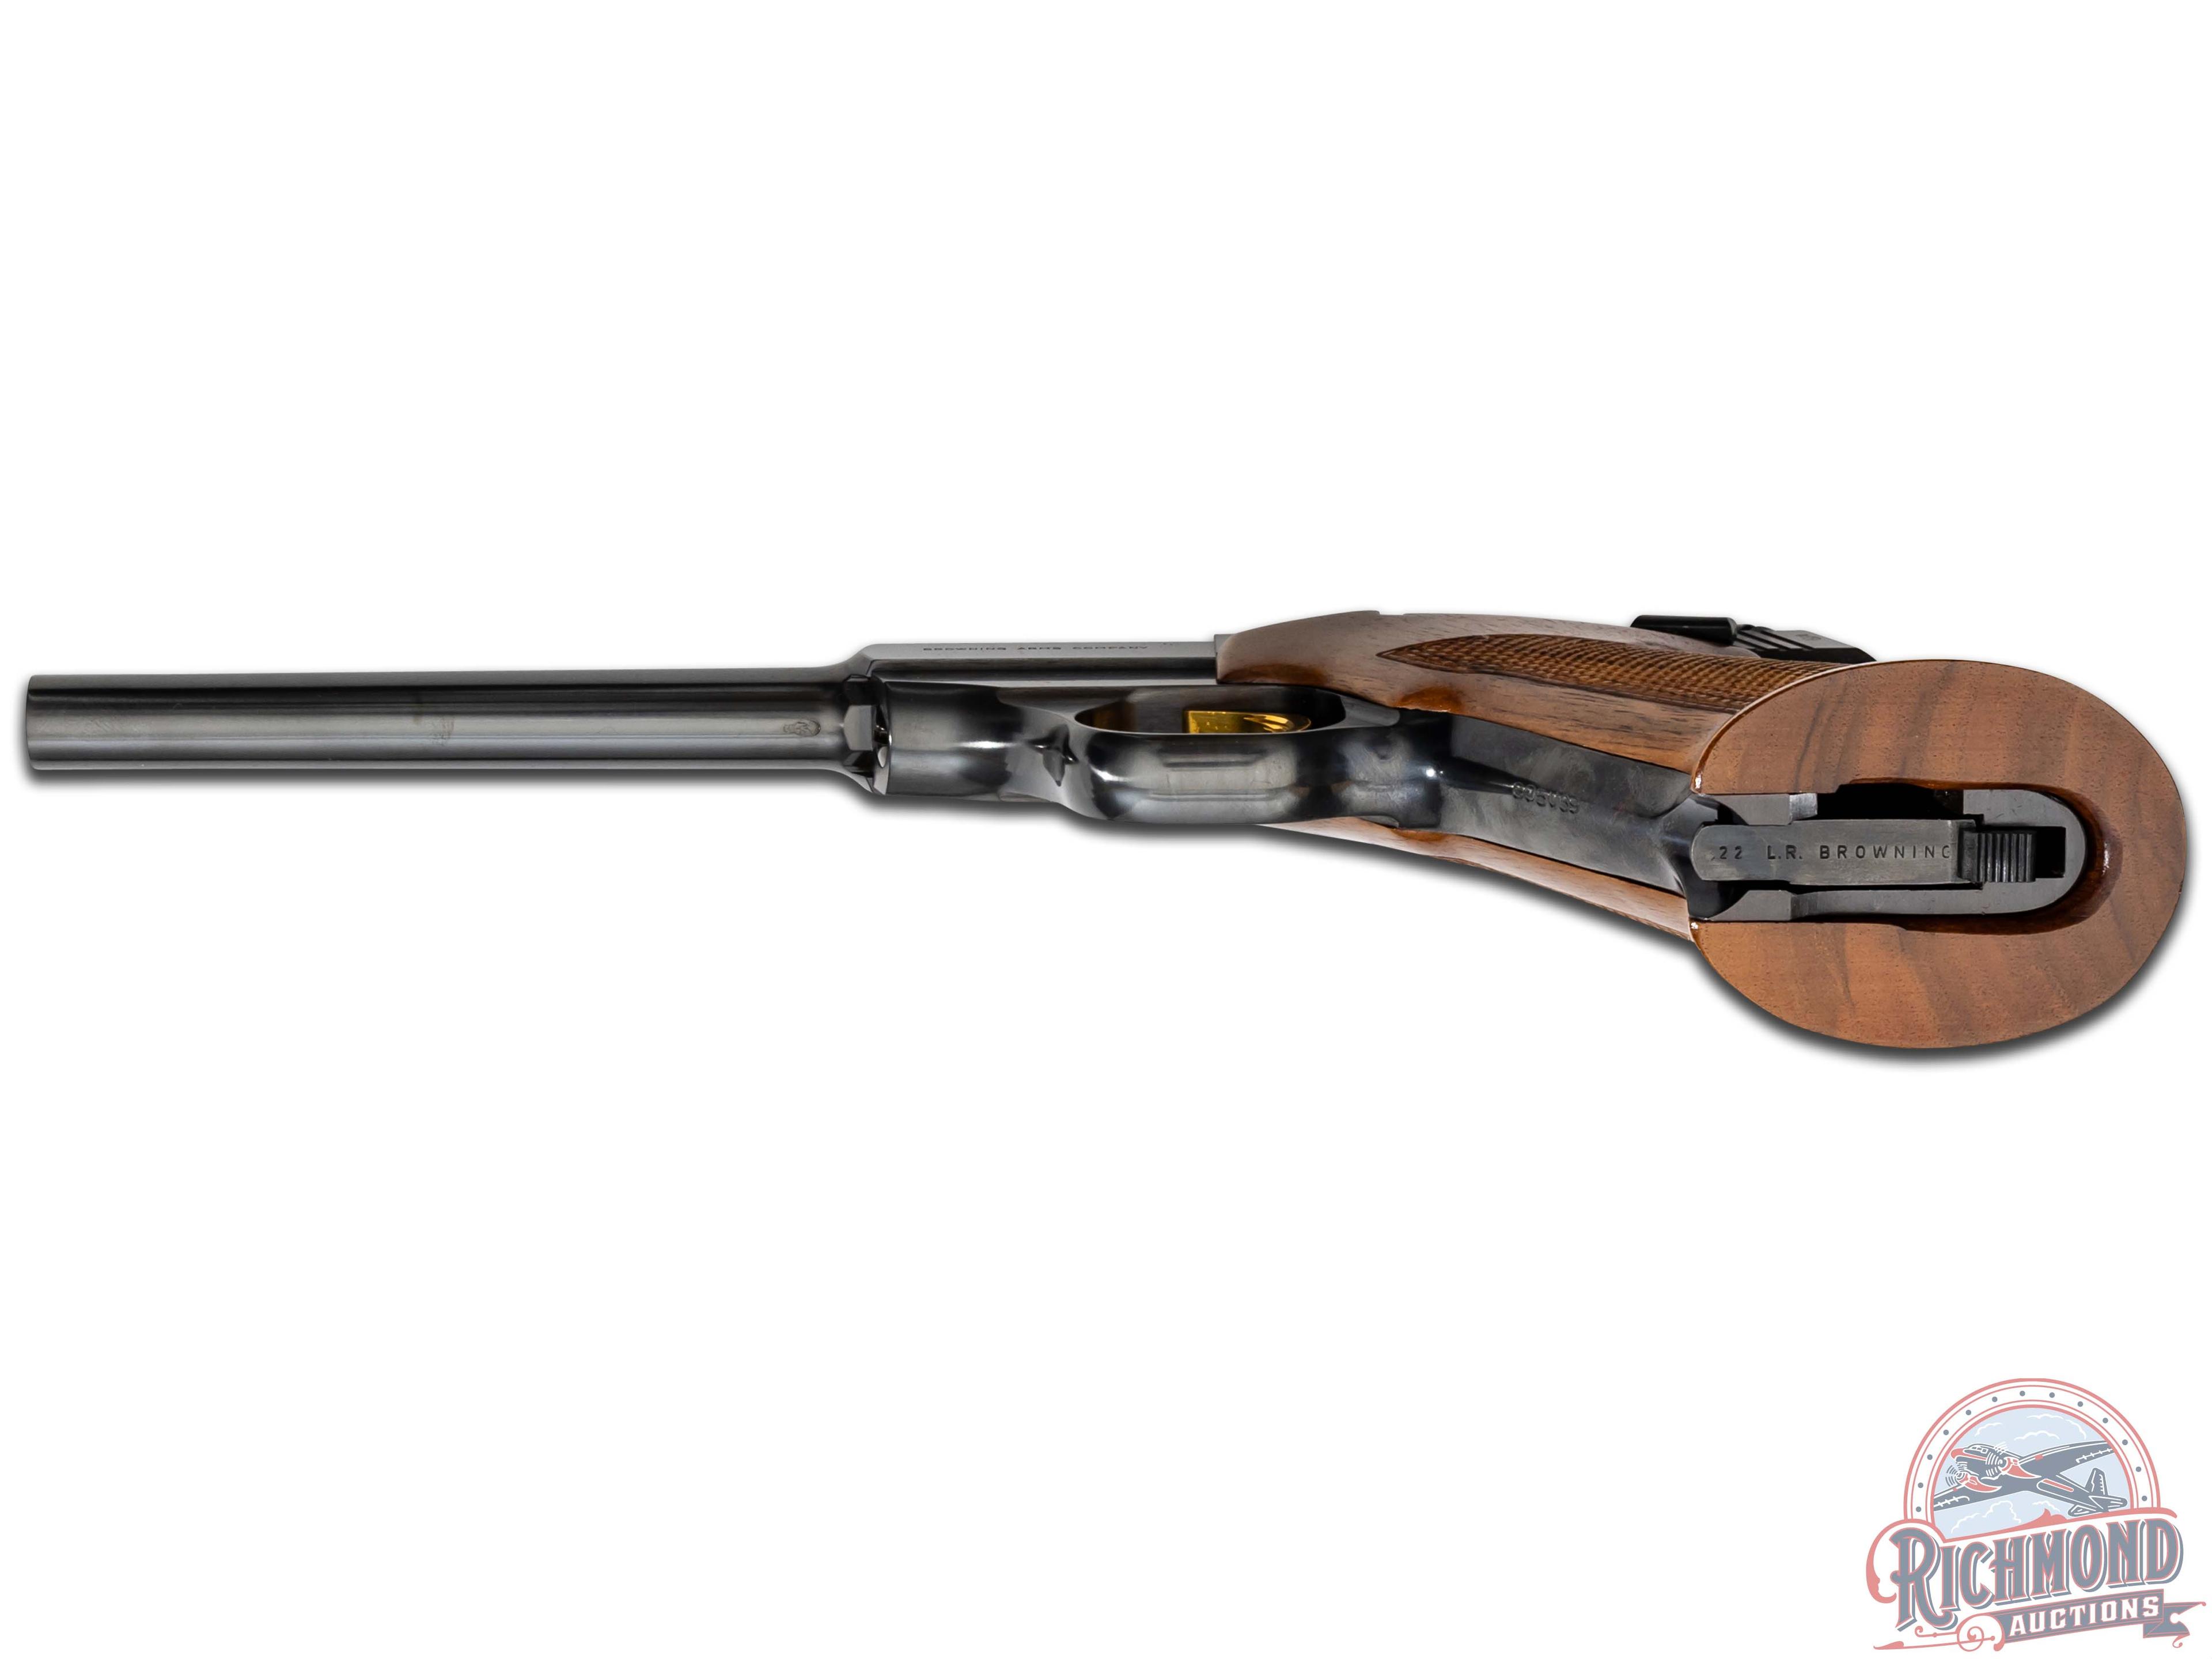 Stunning 1968 Browning Belgian Challenger Target .22 LR Semi-Automatic Pistol